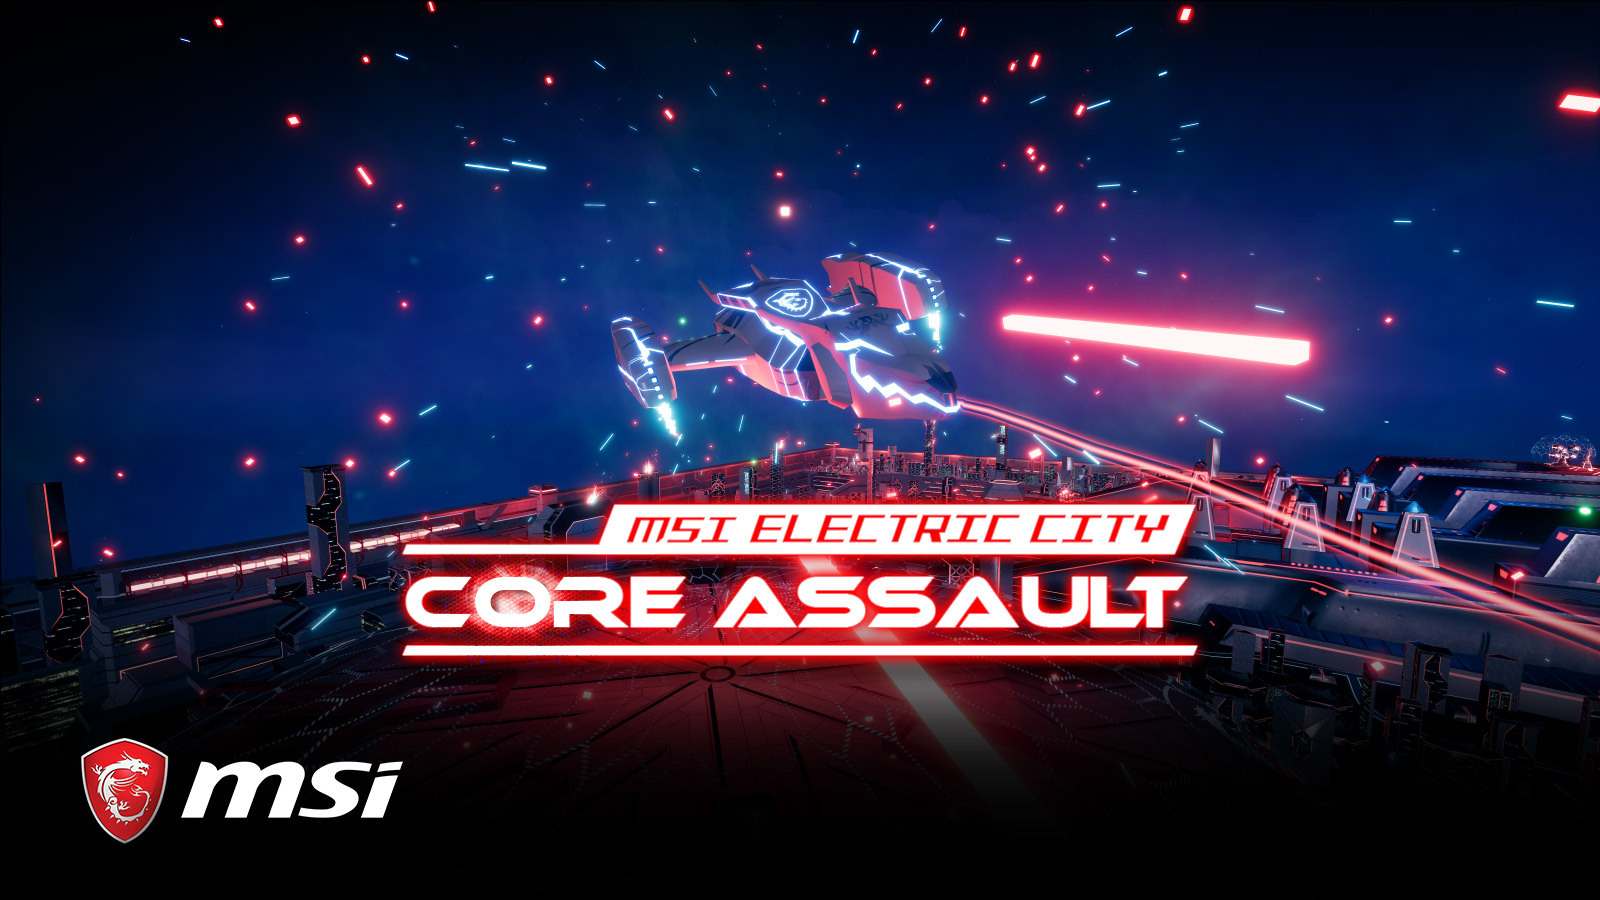 MSI Electric City: Core Assault－Introducing MSI Electric City: Core Assault VR Bullet Hell Game－Steamニュース